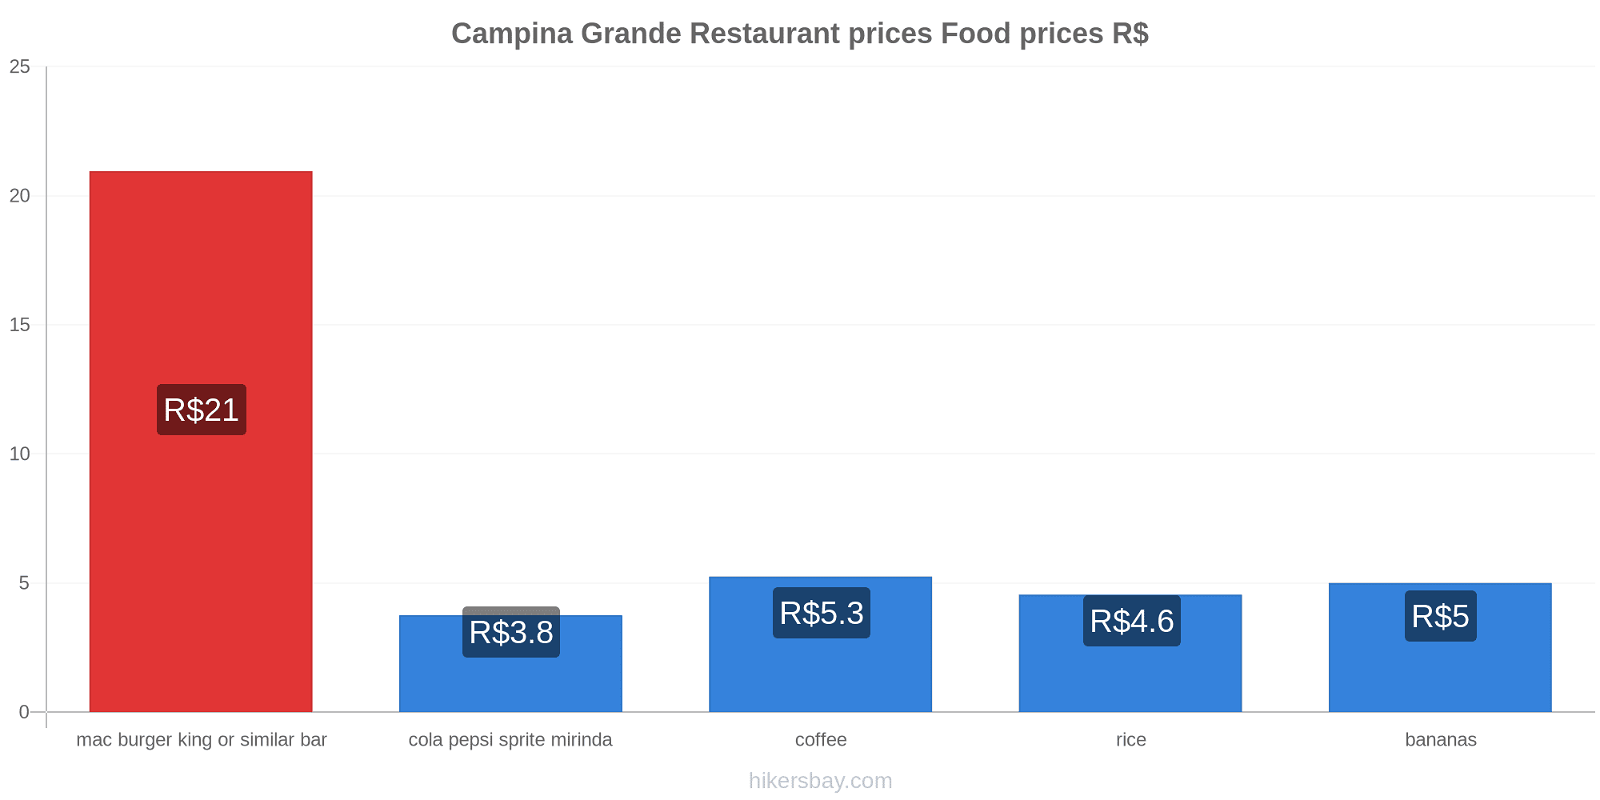 Campina Grande price changes hikersbay.com